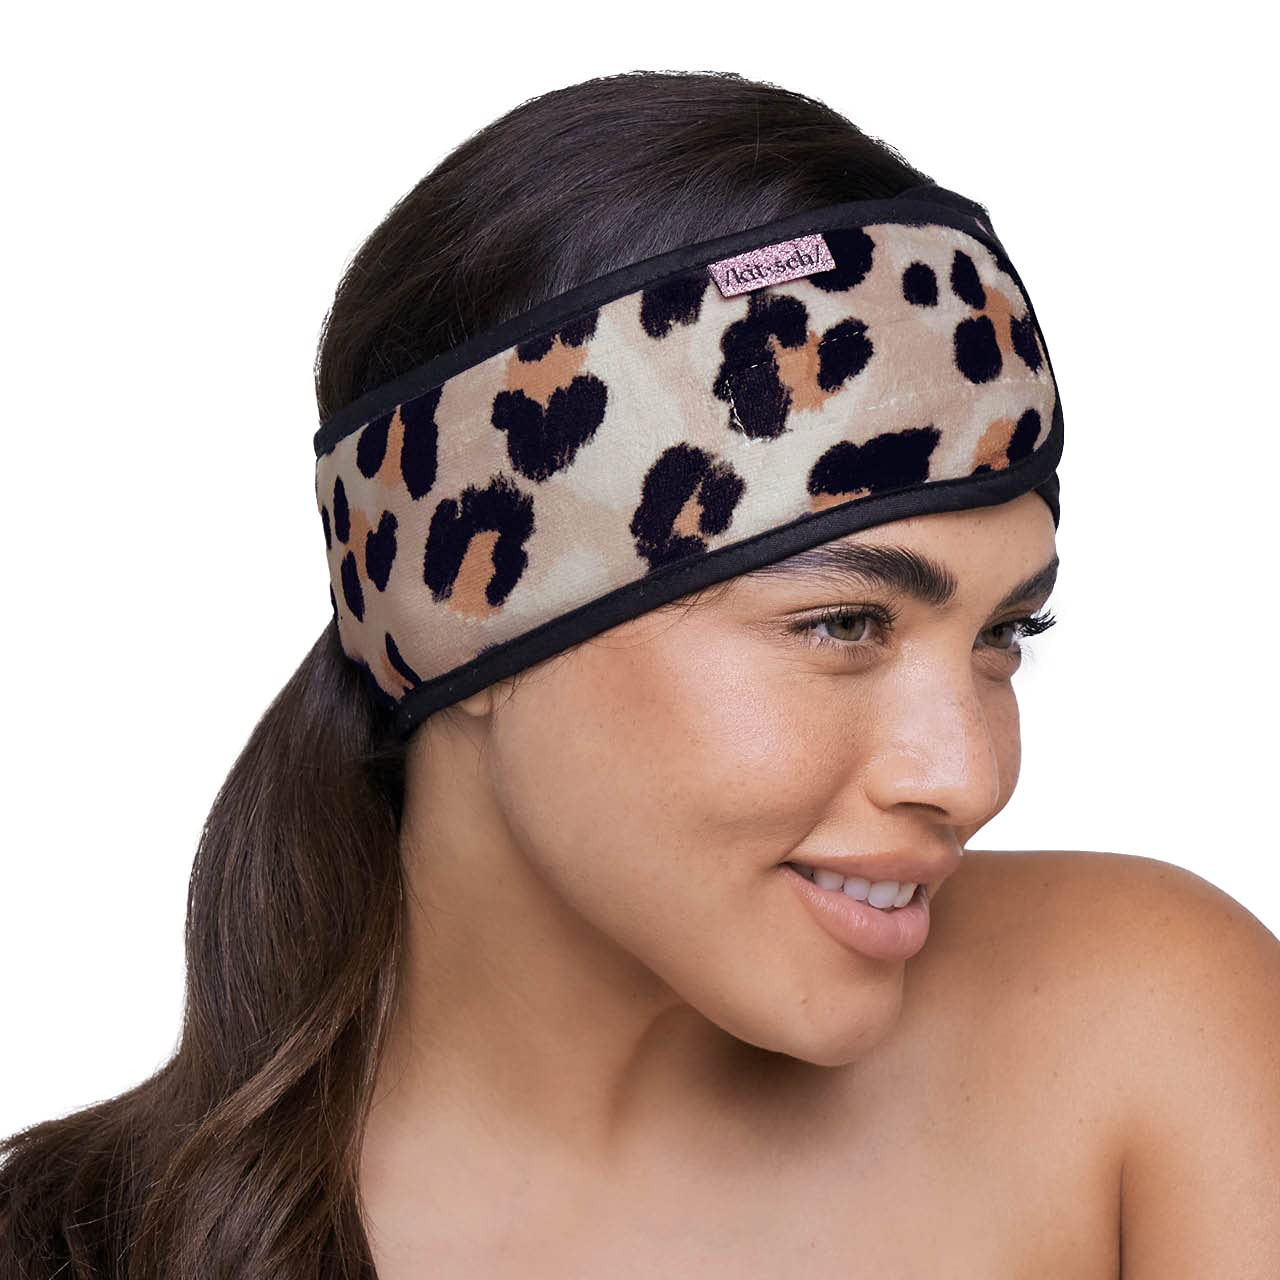 Microfiber Spa Headband - Leopard - Fluhme Beauty Store